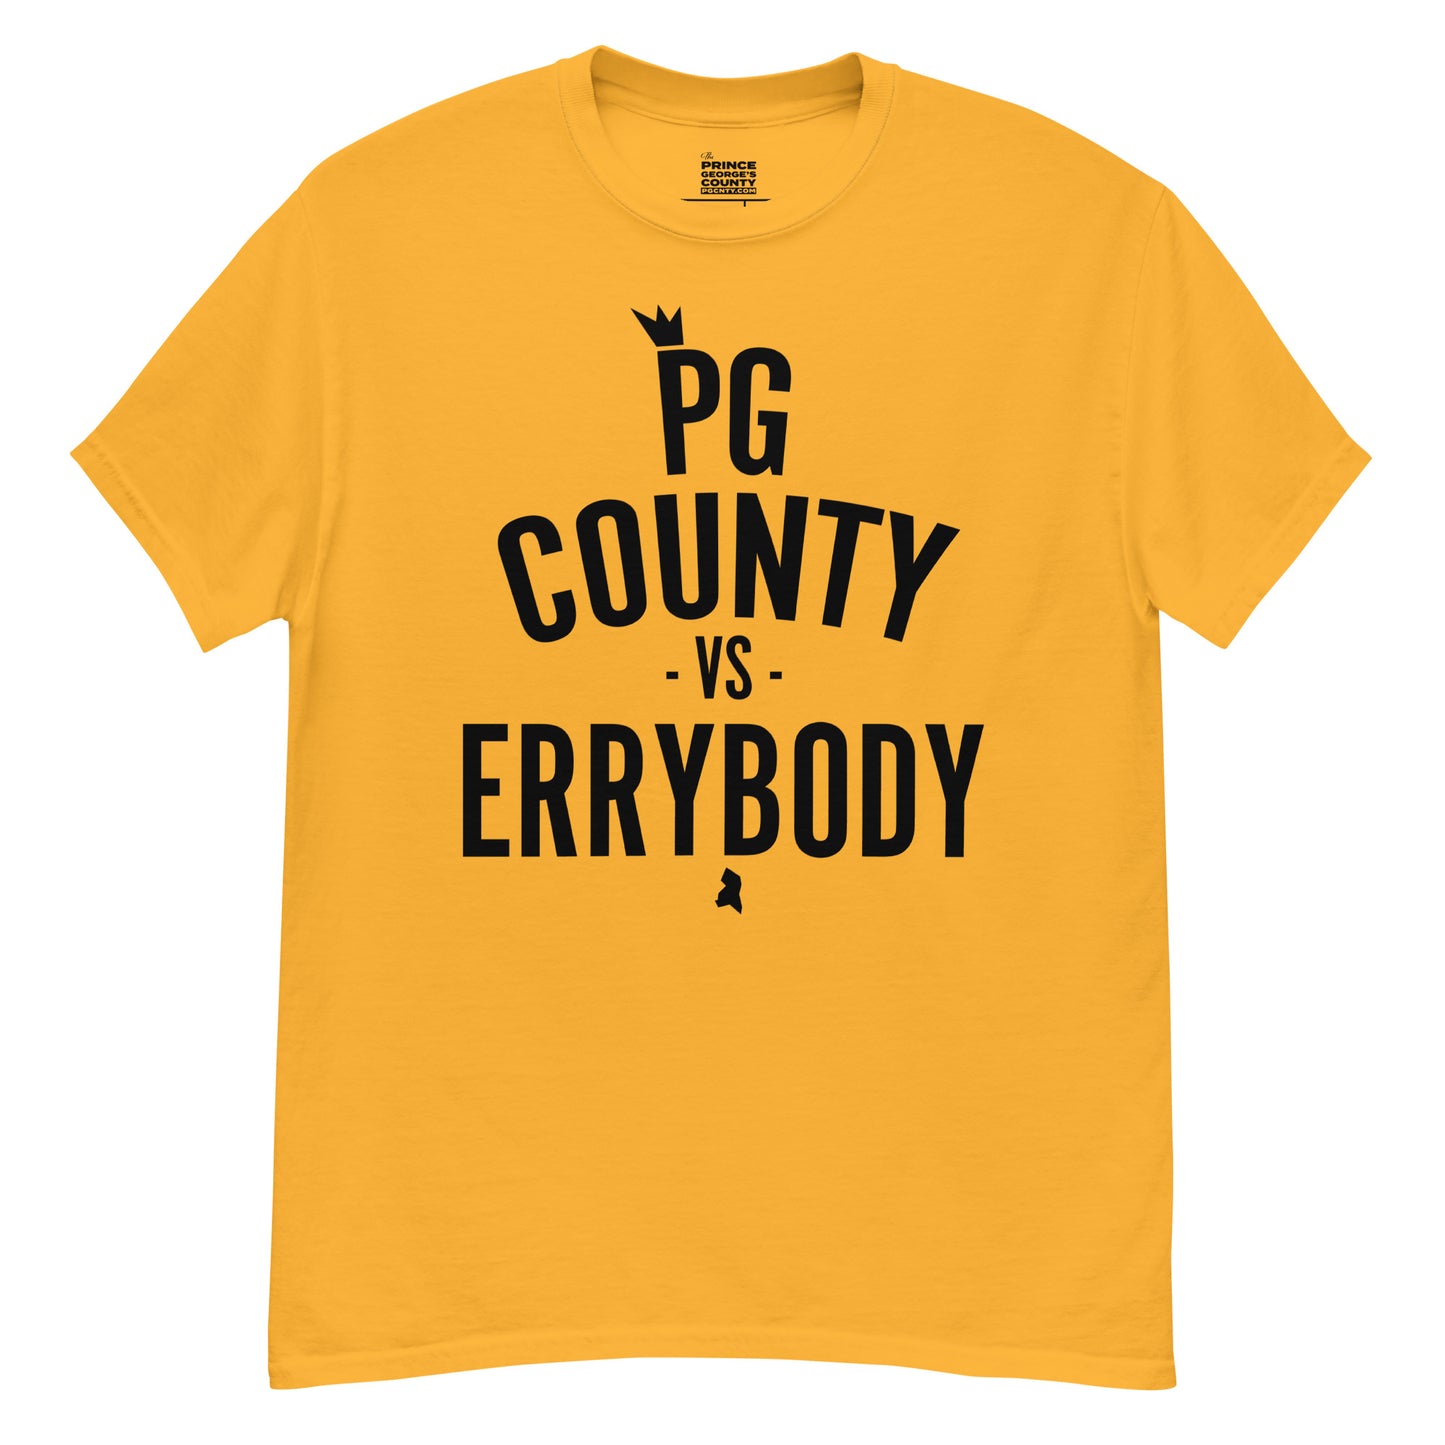 PG County VS ERRYBODY Golden Tee